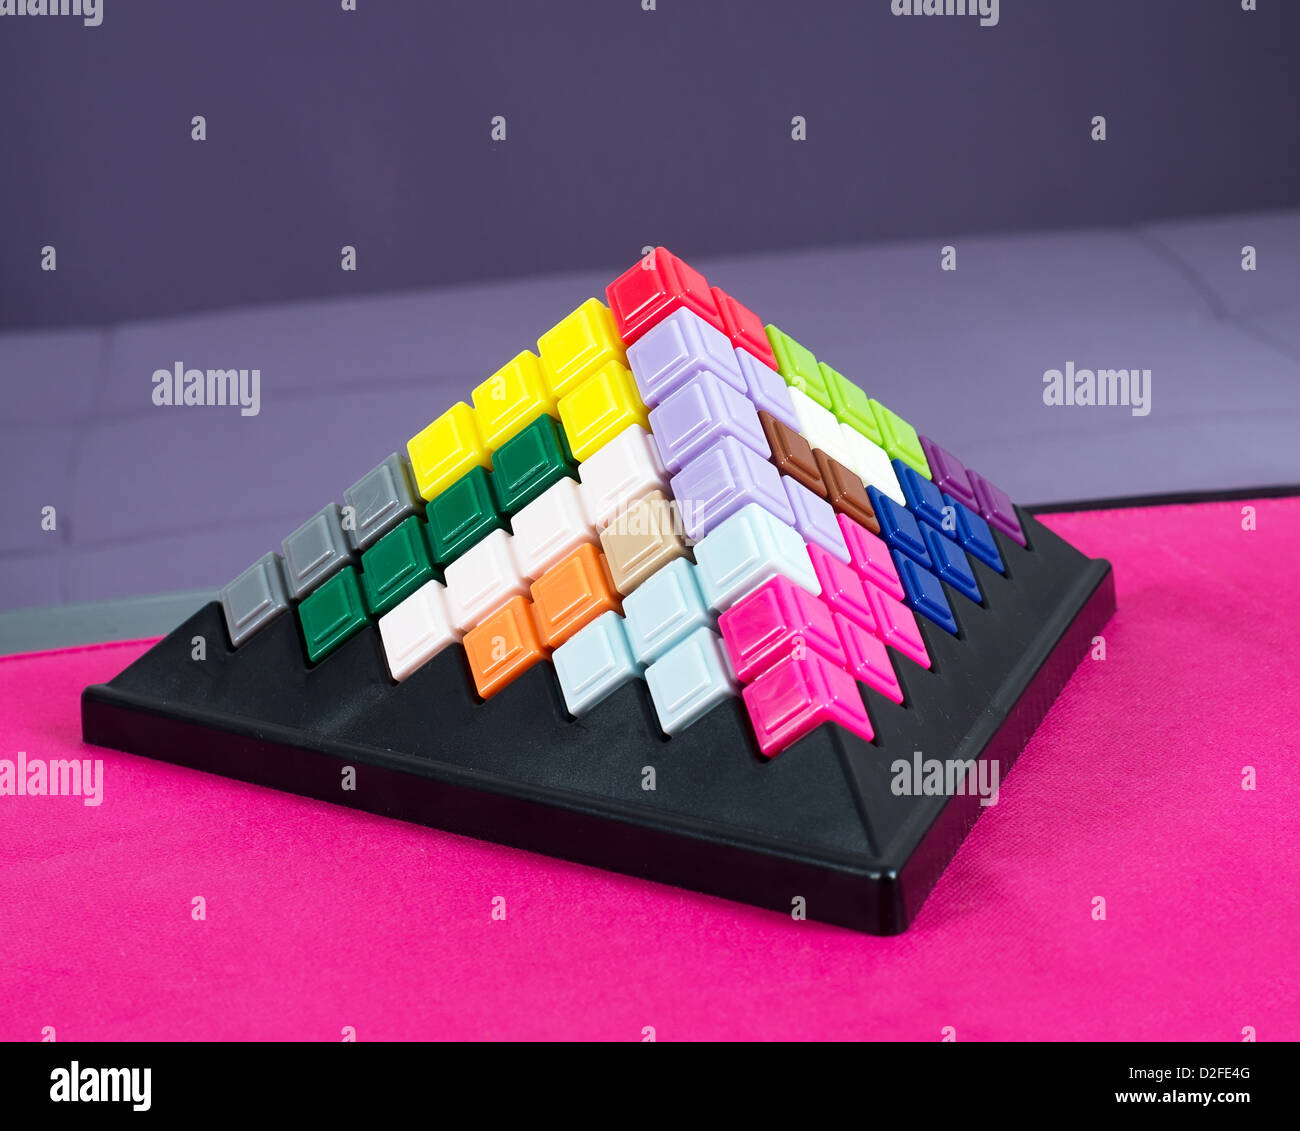 Building blocks of the pyramid Stock Photo